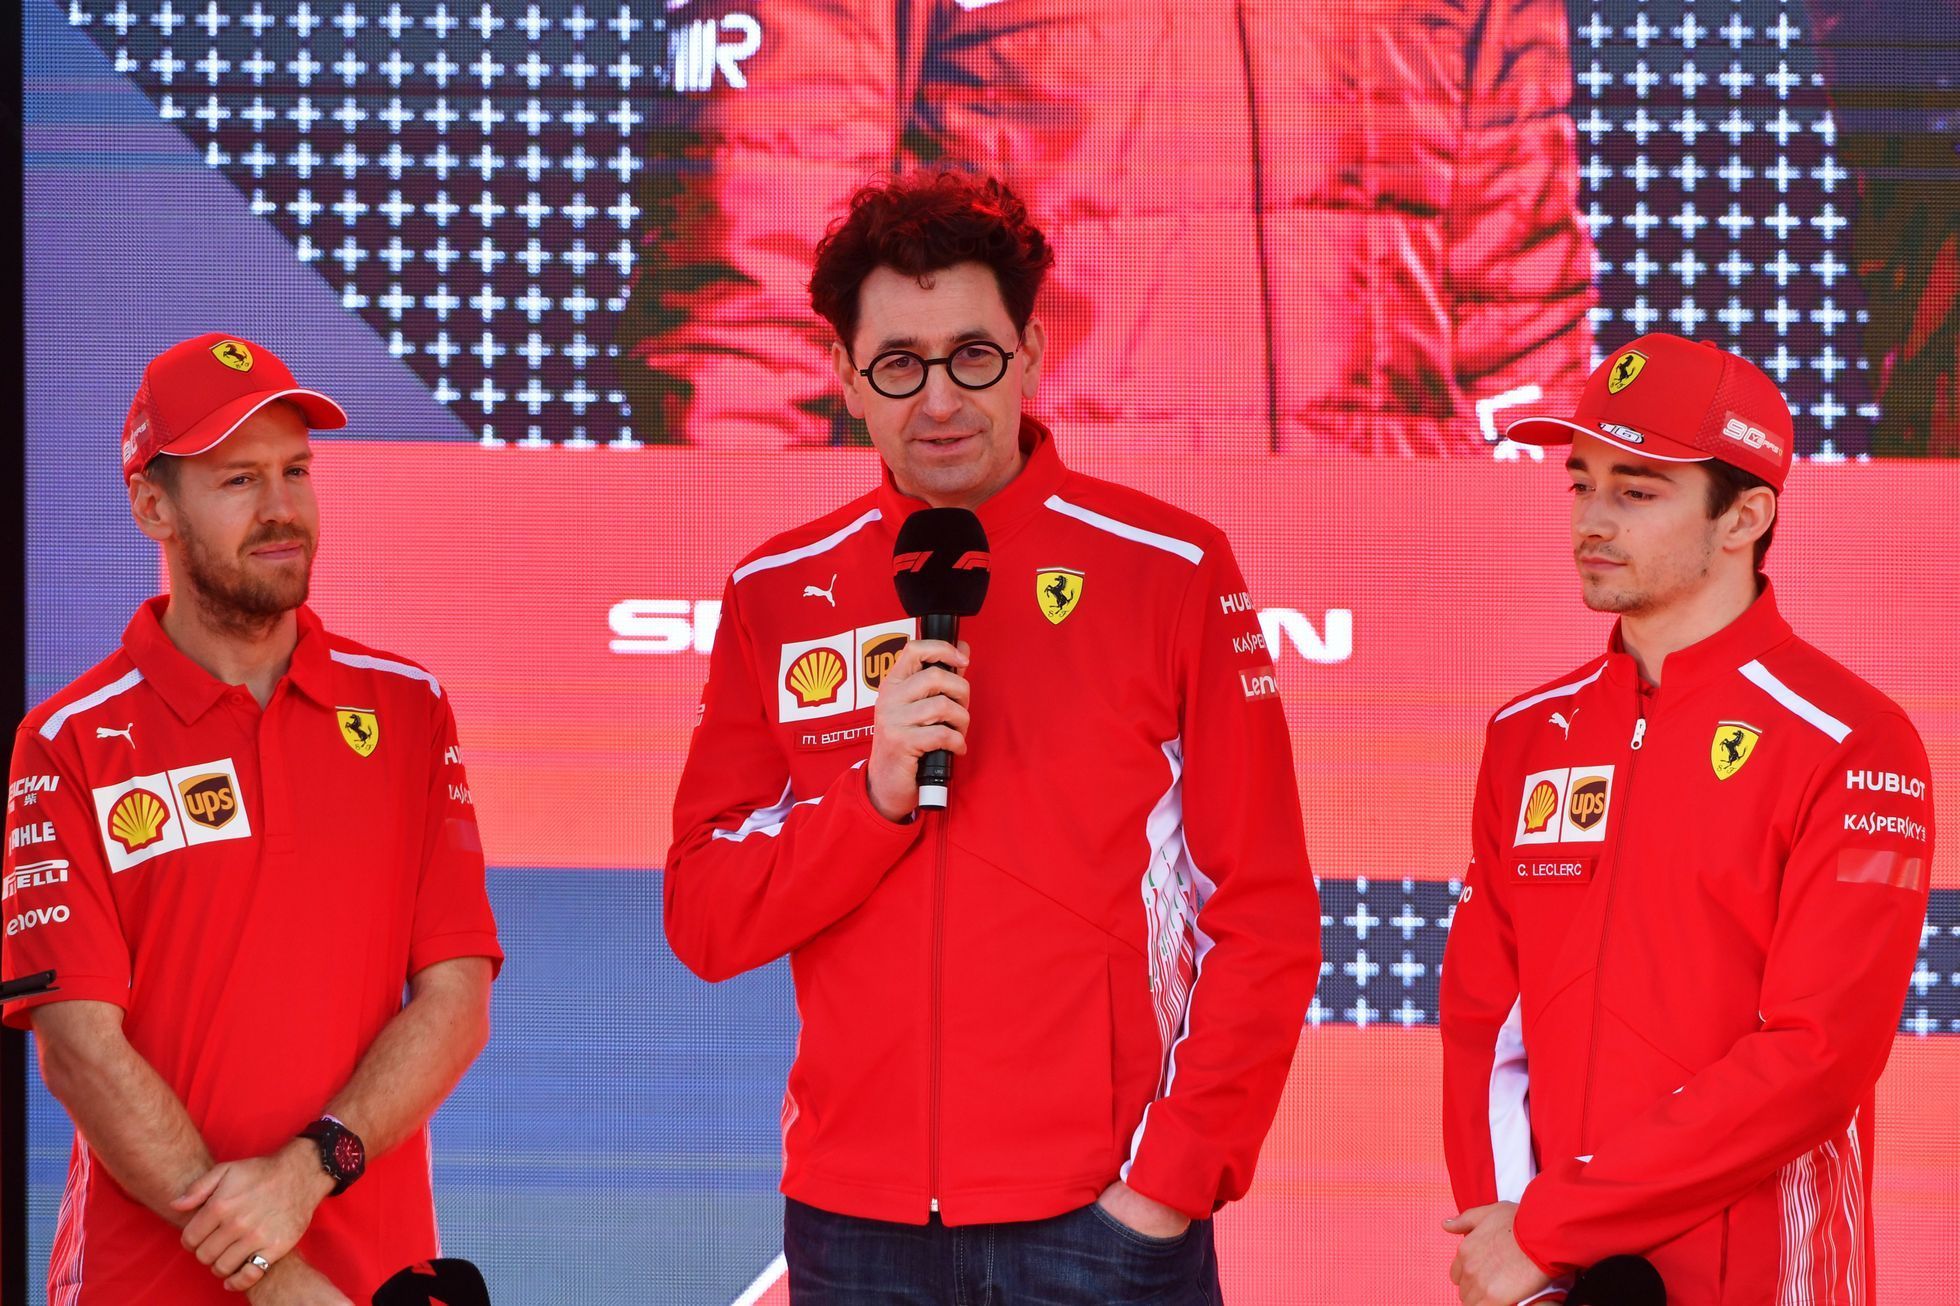 F1, VC Austrálie 2019: Sebastian Vettel, Mattia Binotto a Charles Leclerc, Ferrari